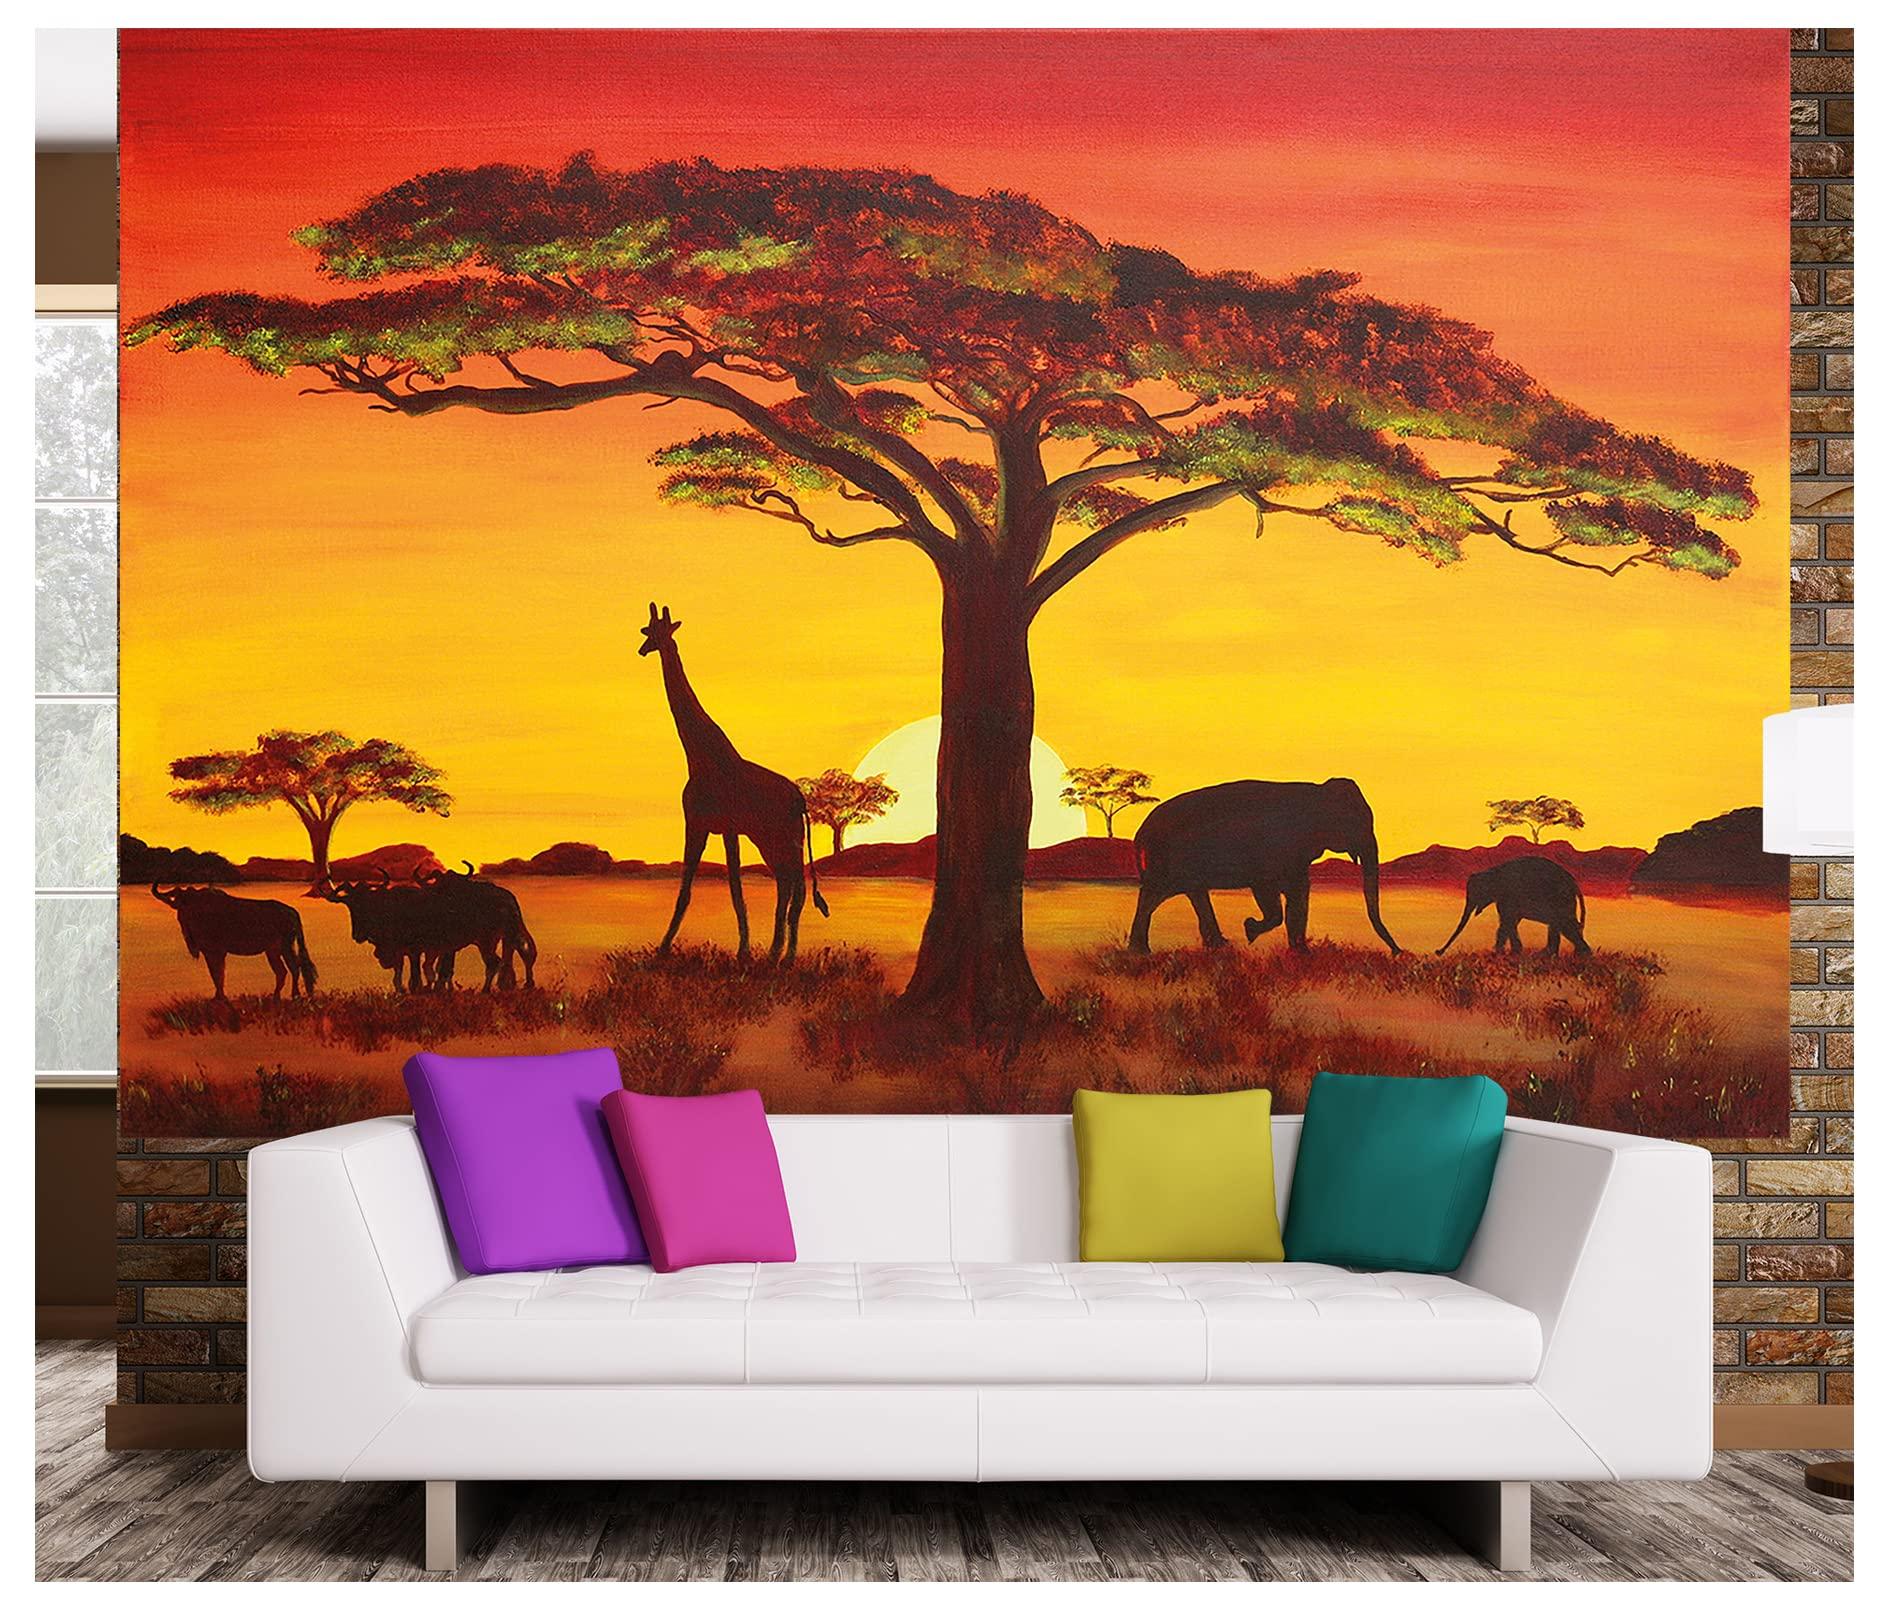 Buy GREAT ART Mural Sunset in Africa wallpaper Sunset Safari